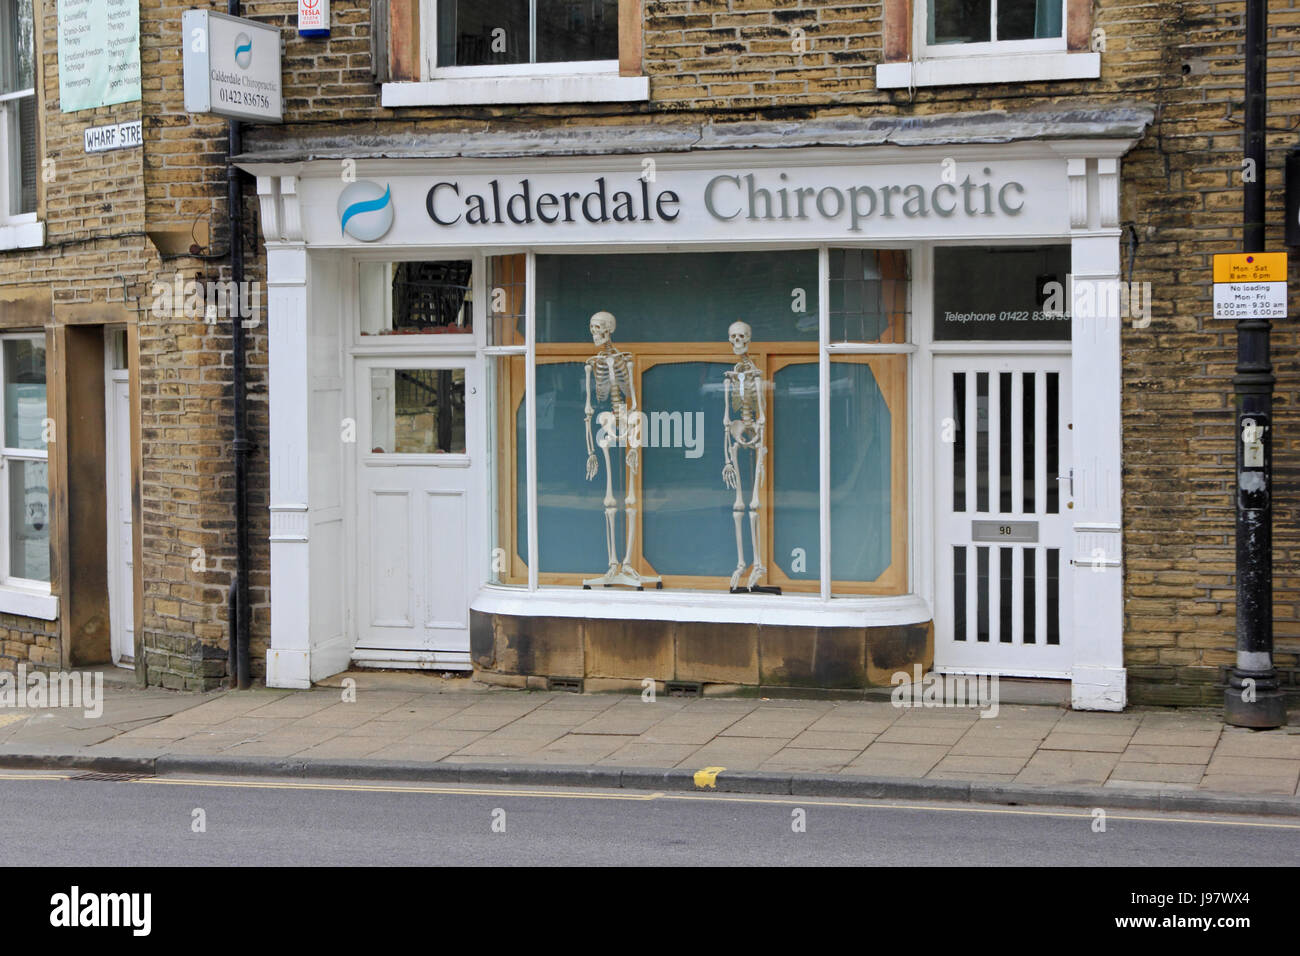 Calderdale Chiropractic, with skeletons in window,  Sowerby Bridge Stock Photo